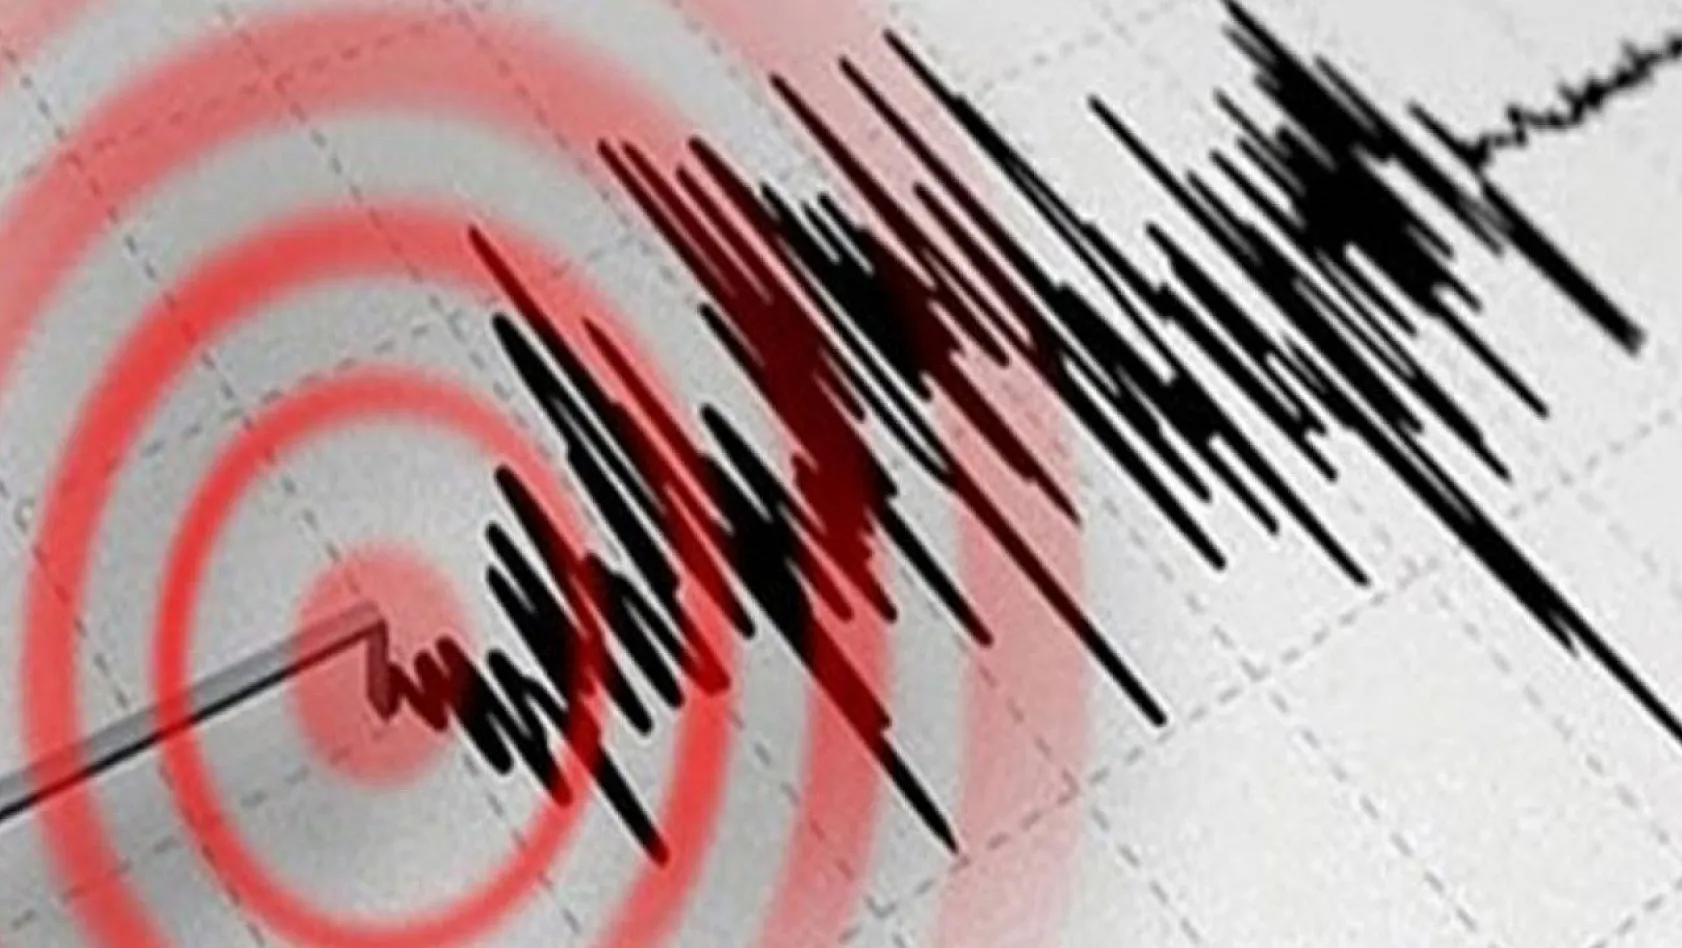 Malatya'da Deprem! Elazığ'da Da Hissedildi